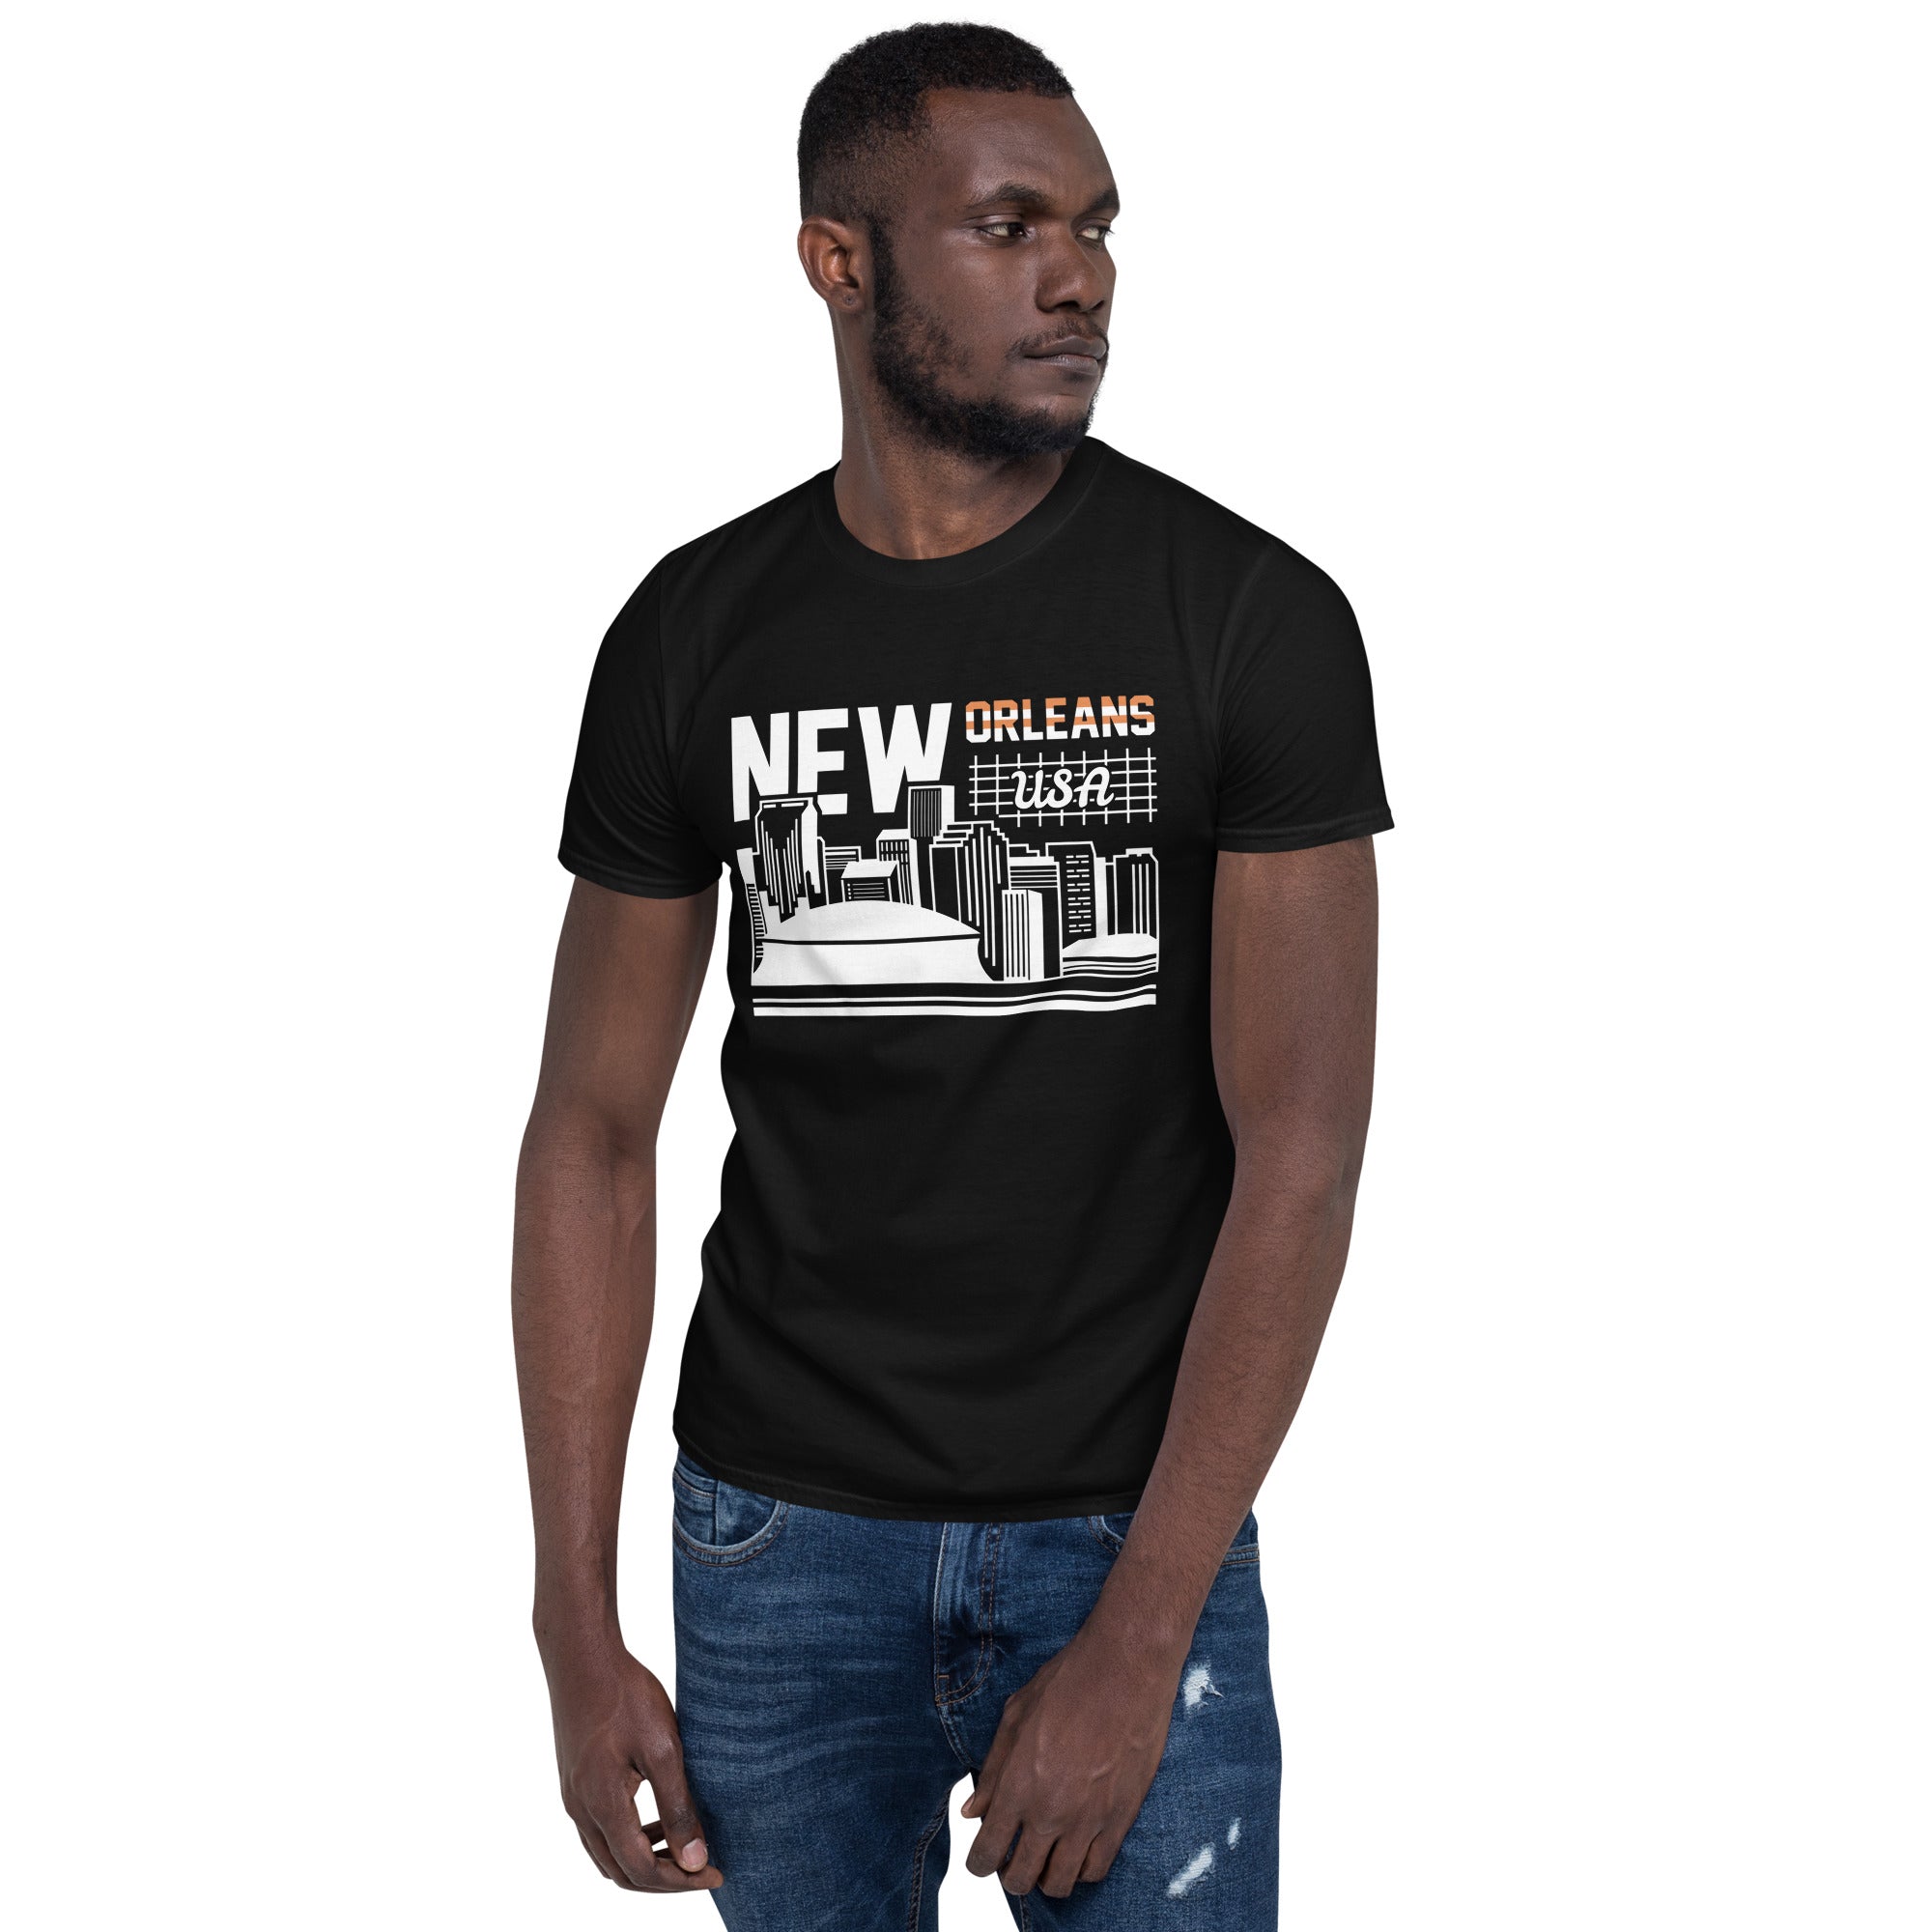 New Orleans - Short-Sleeve Unisex T-Shirt